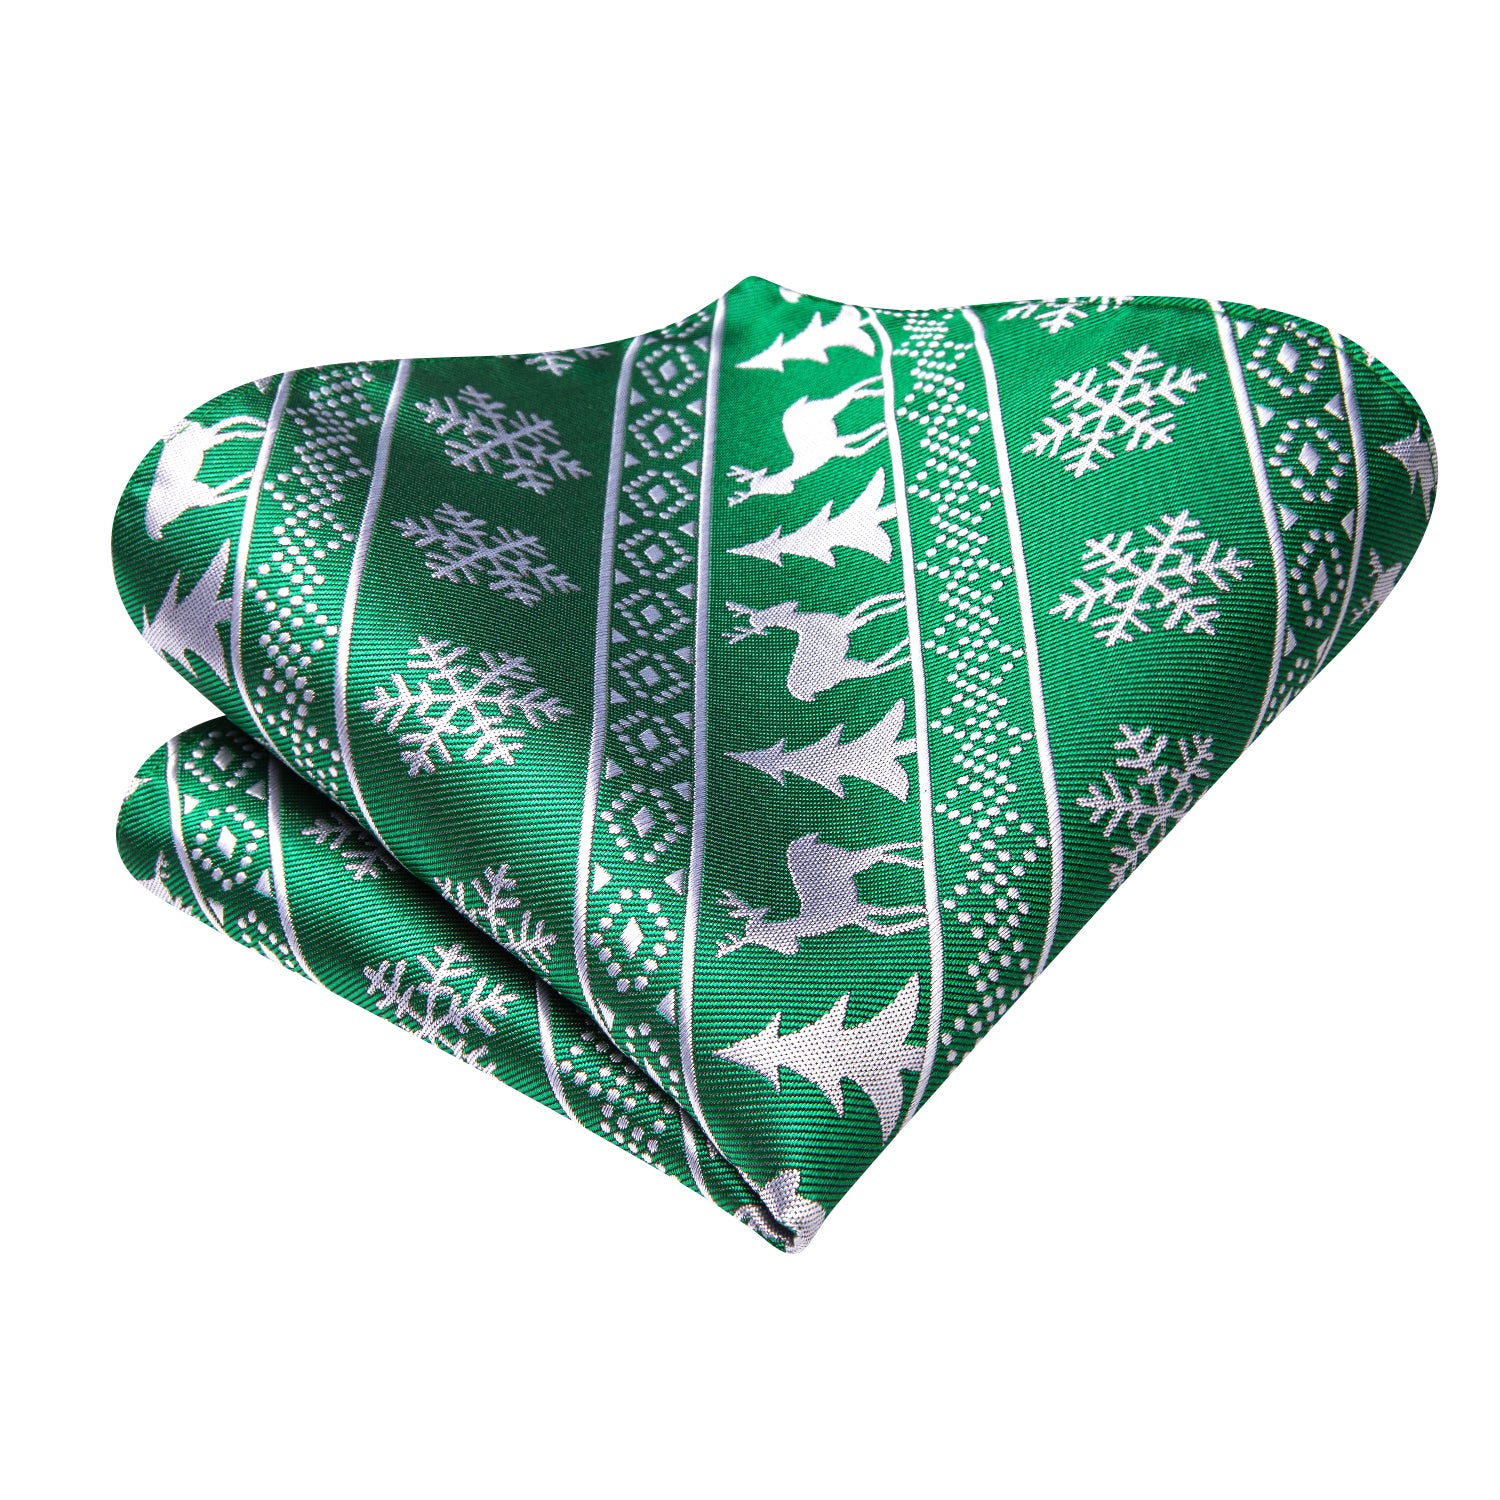 Green White Christmas Novelty Self-tied Bow Tie Hanky Cufflinks Set